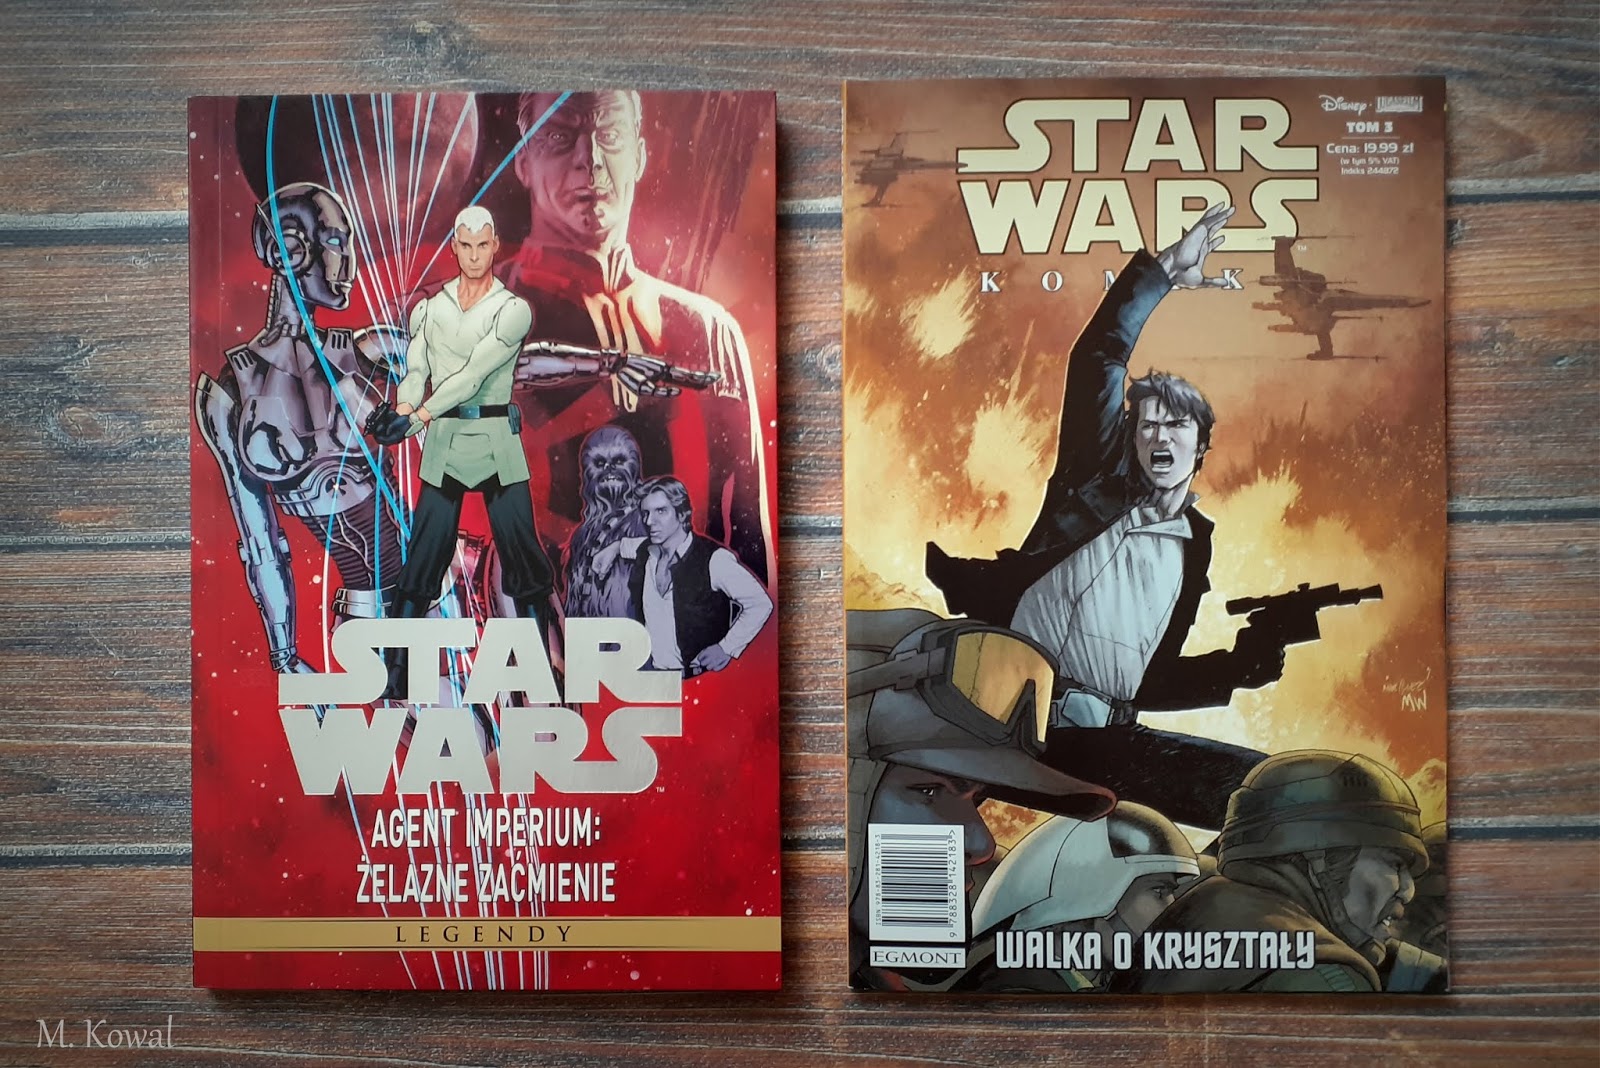 Star Wars Komiks 3/2019 – Walka o kryształy